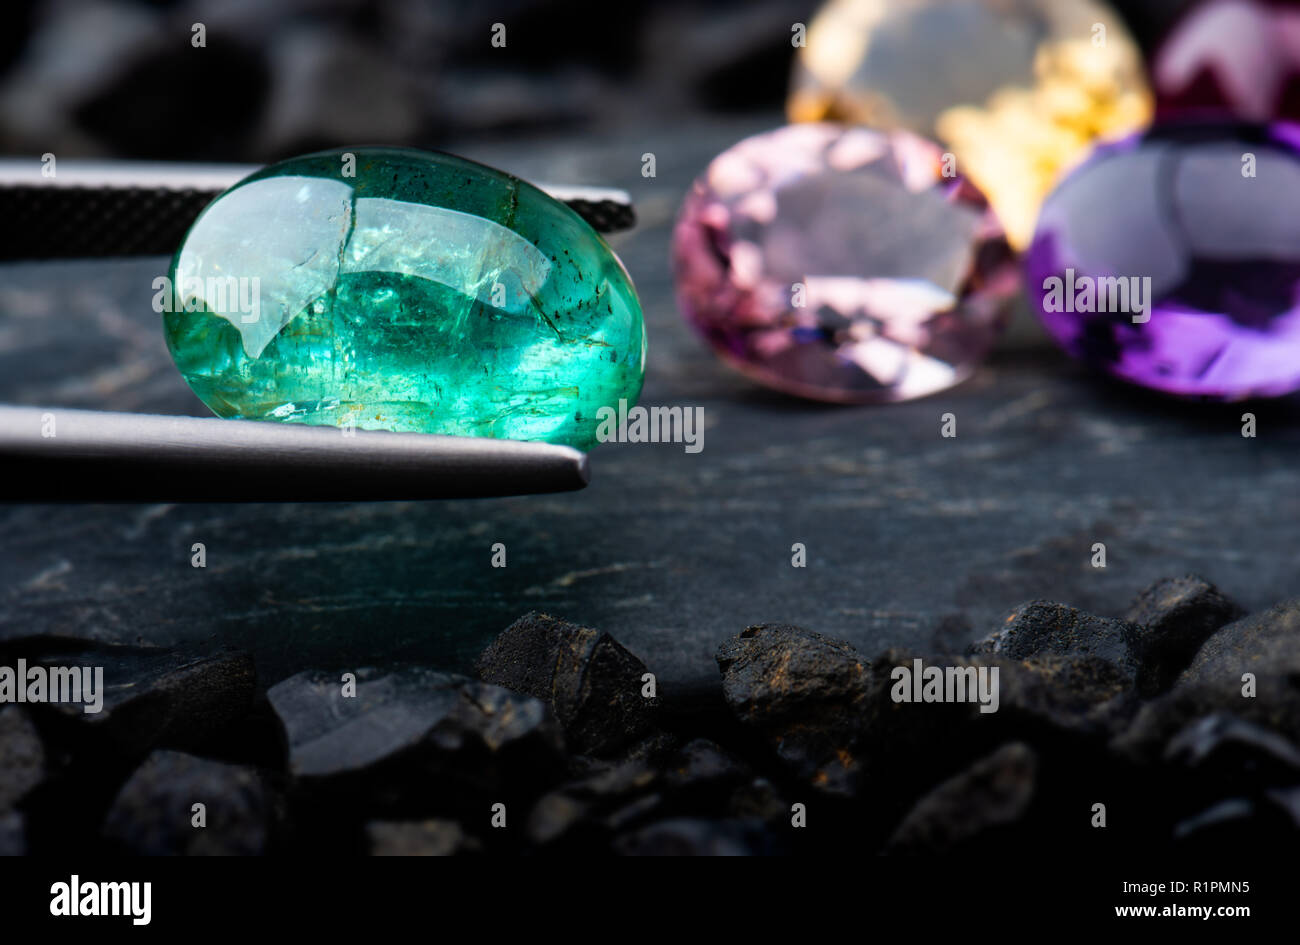 The emerald gemstone jewelry photo with black stones and dark lighting  Stock Photo - Alamy